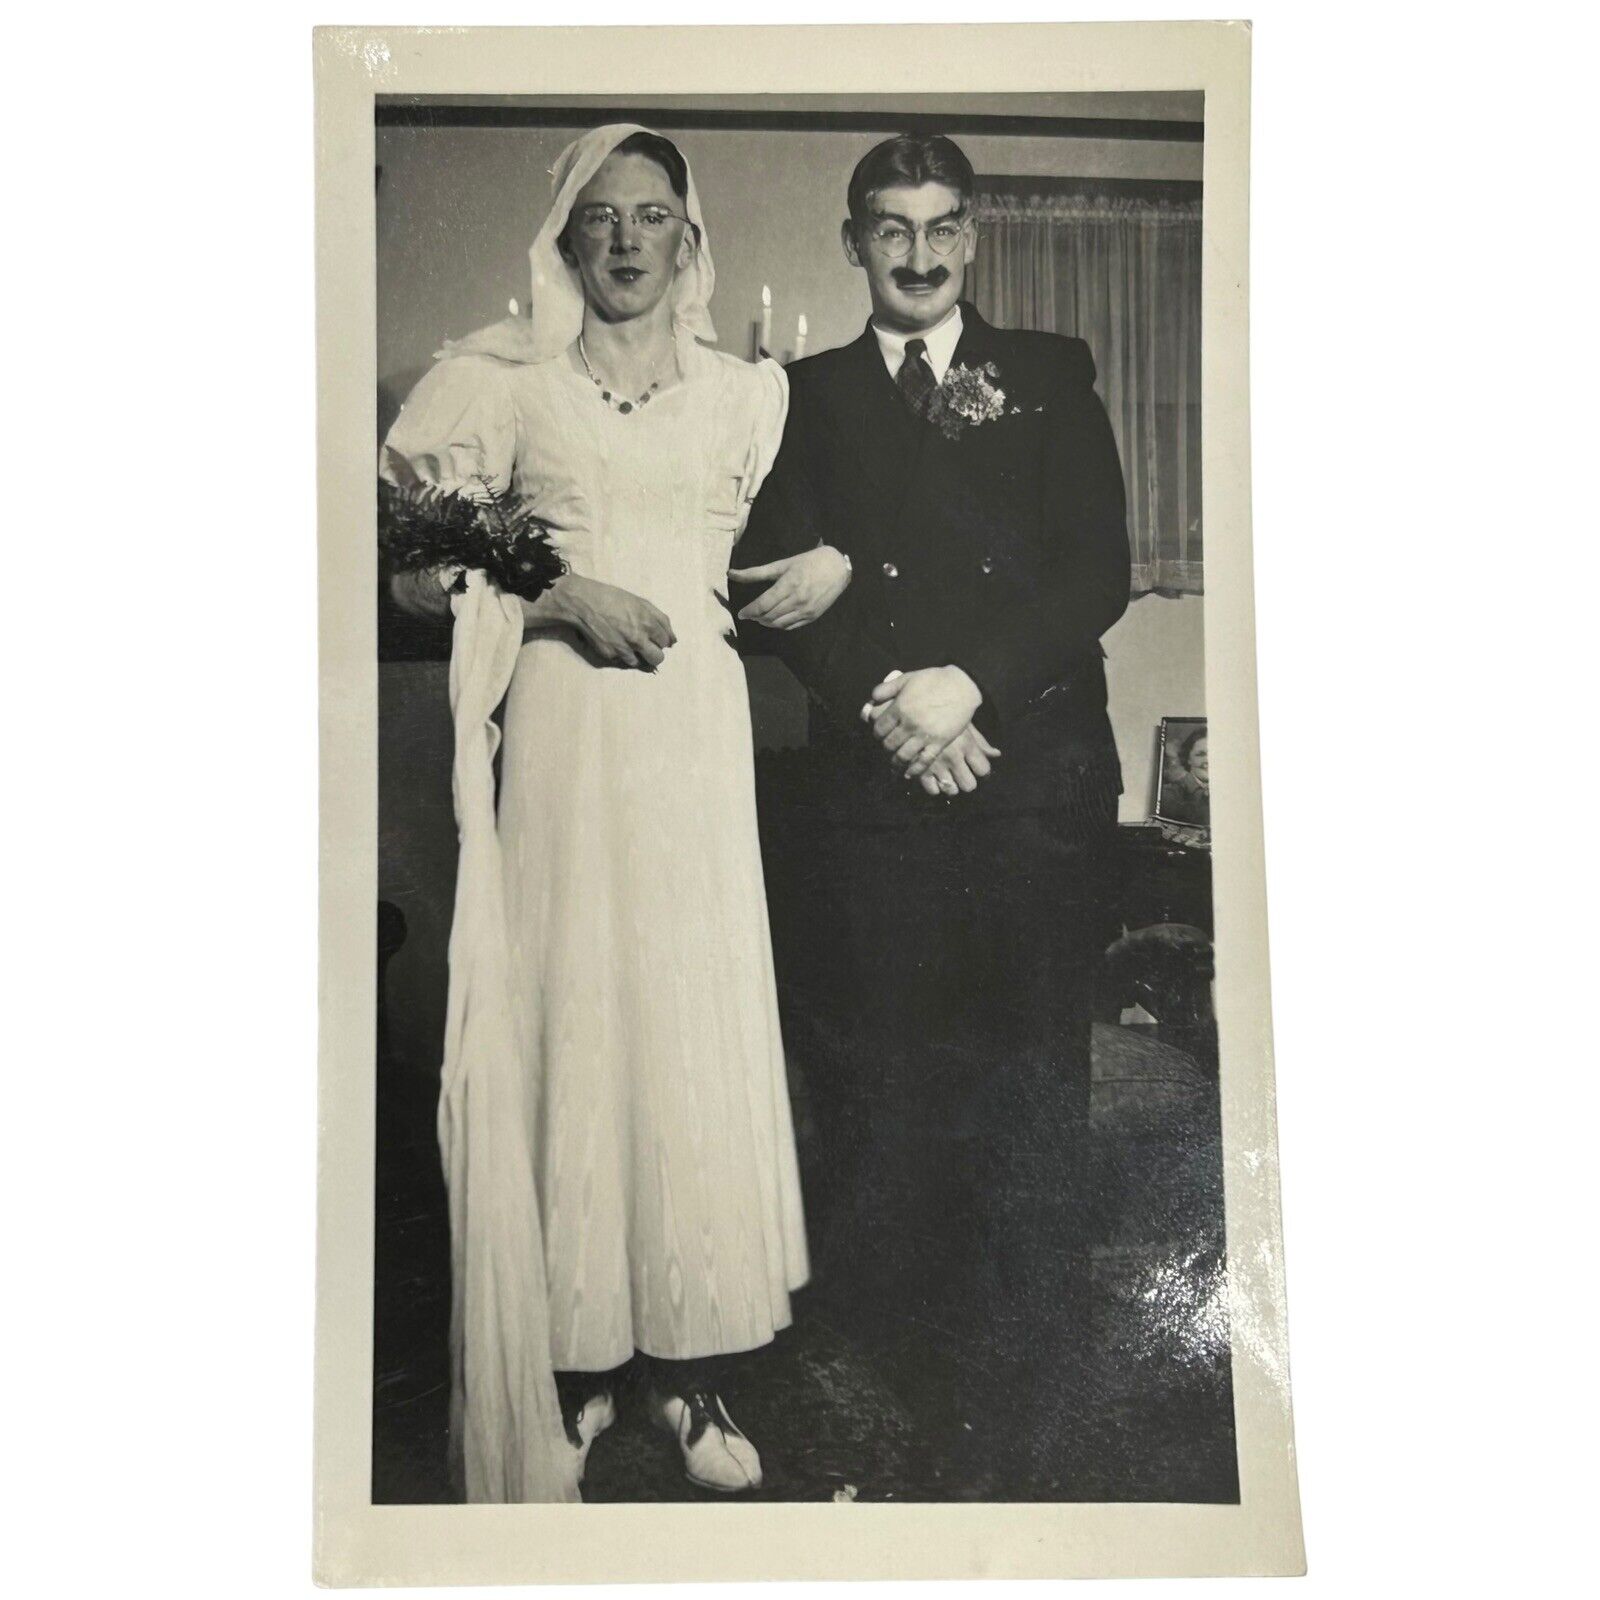 Antique Photo Cross Dressing Men As Wedding Couple Groucho Look-alike Gay LGBTQ